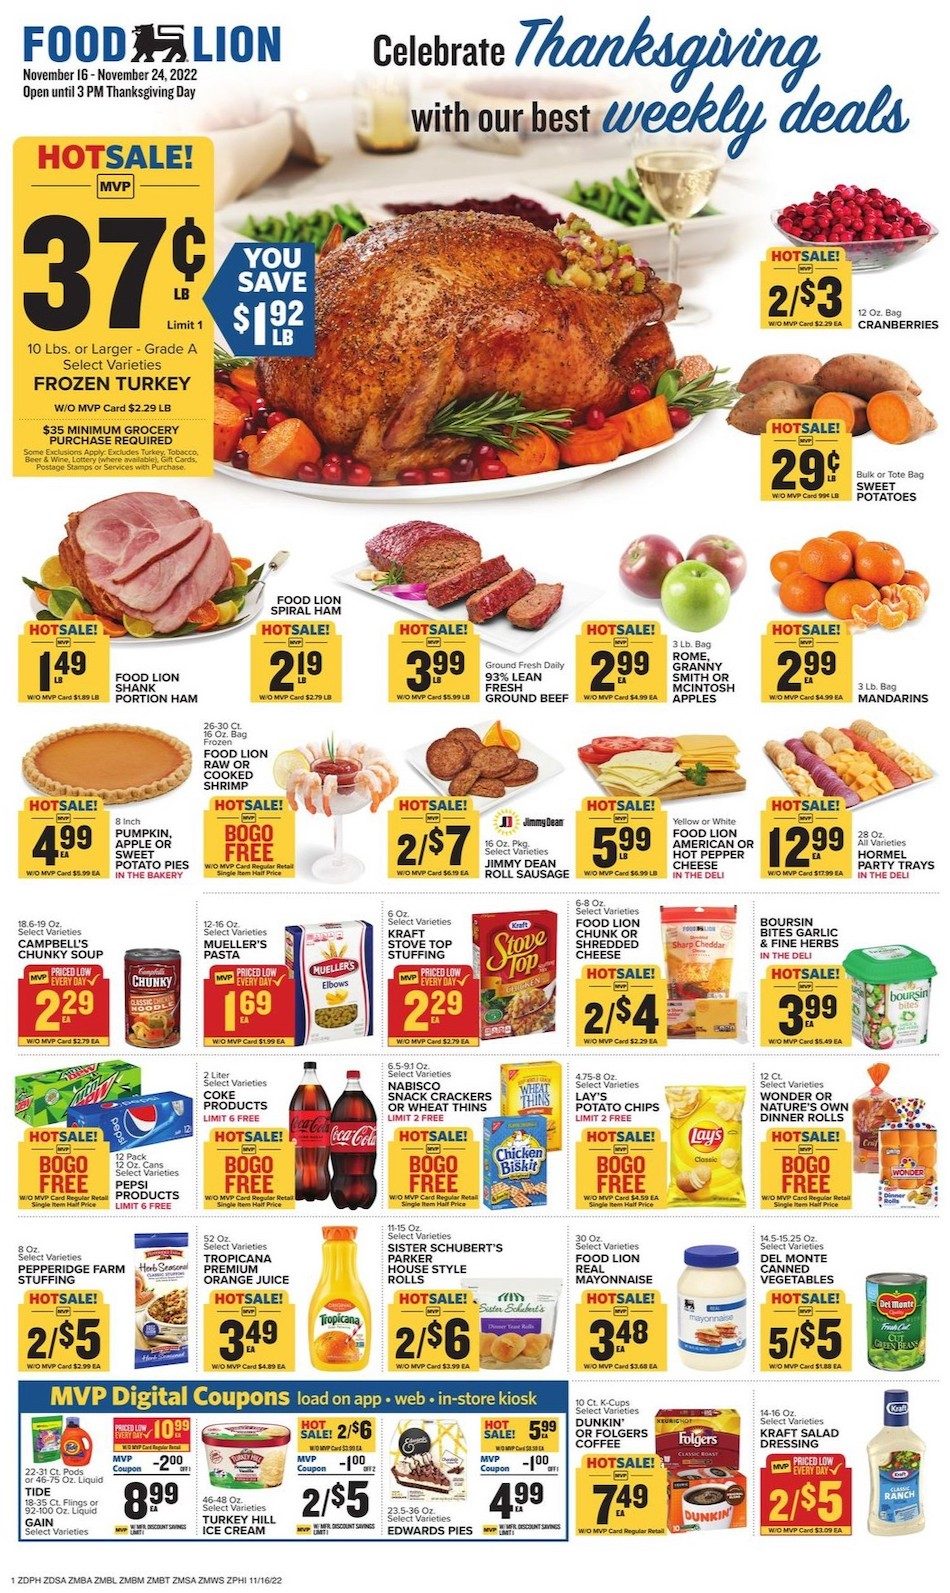 Food Lion Weekly Ad Thanksgiving Nov 16 24, 2022 WeeklyAds2